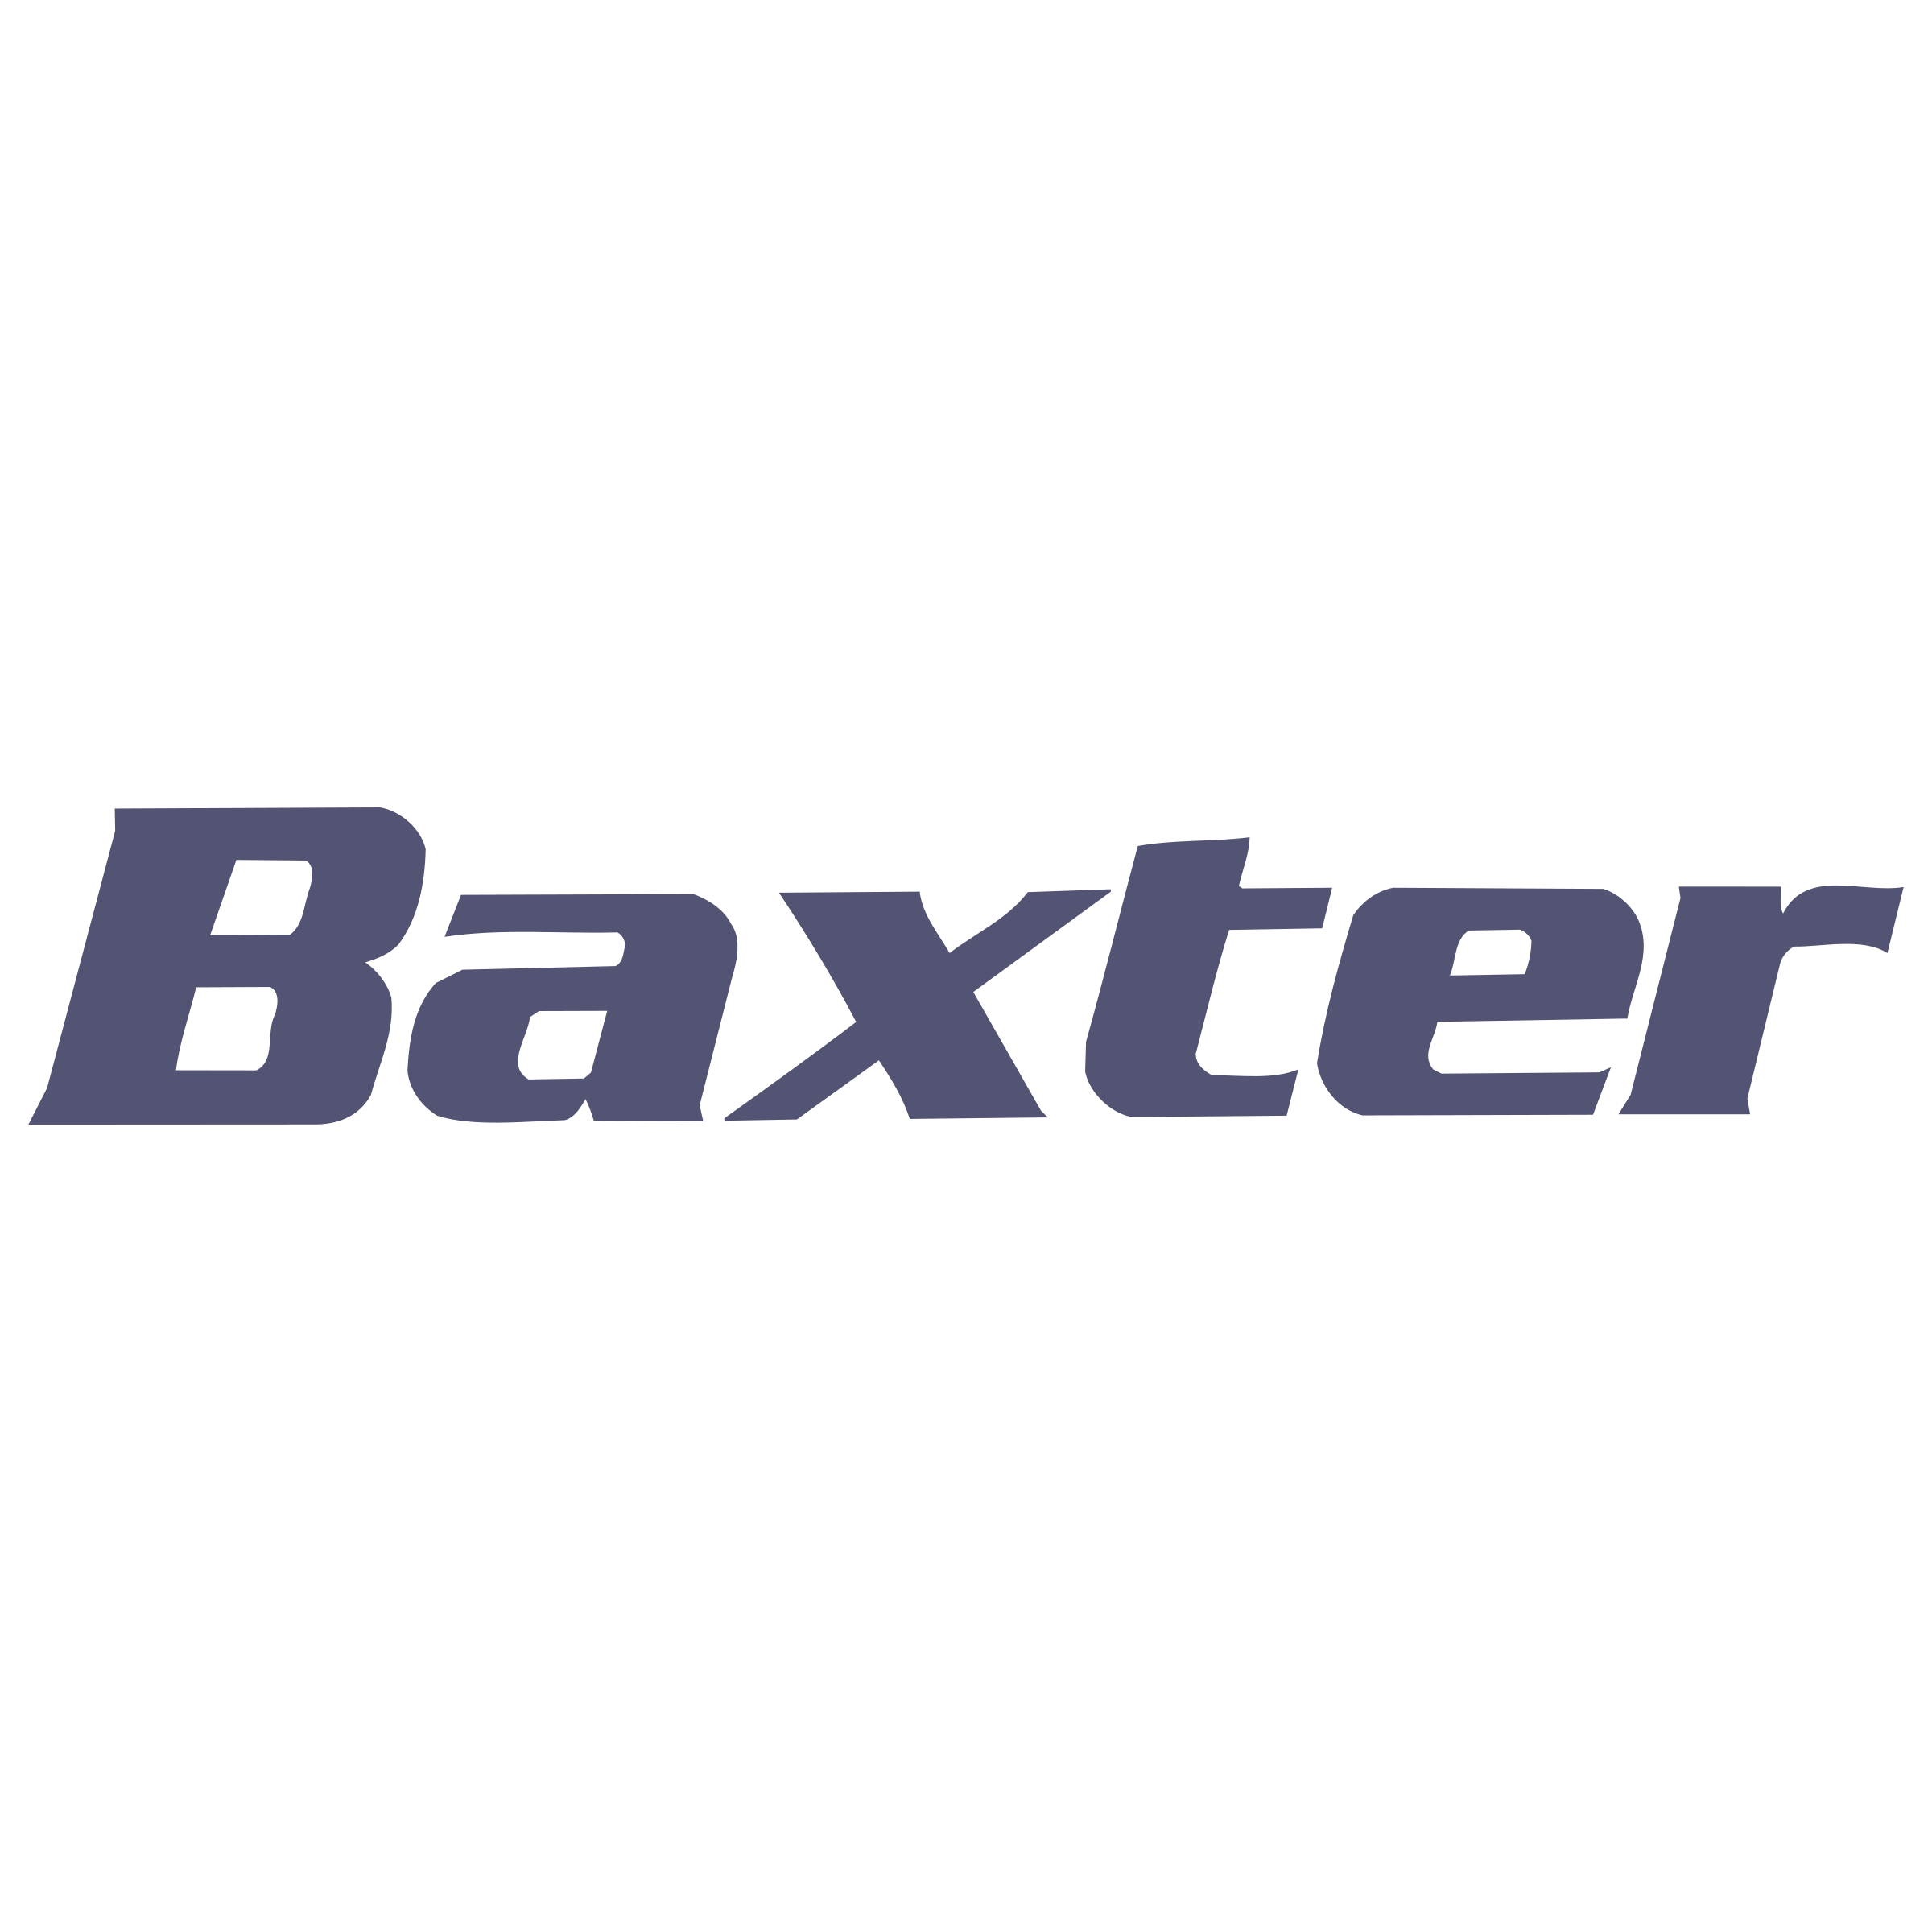 Baxter Logo - Baxter Logo PNG Transparent & SVG Vector - Freebie Supply